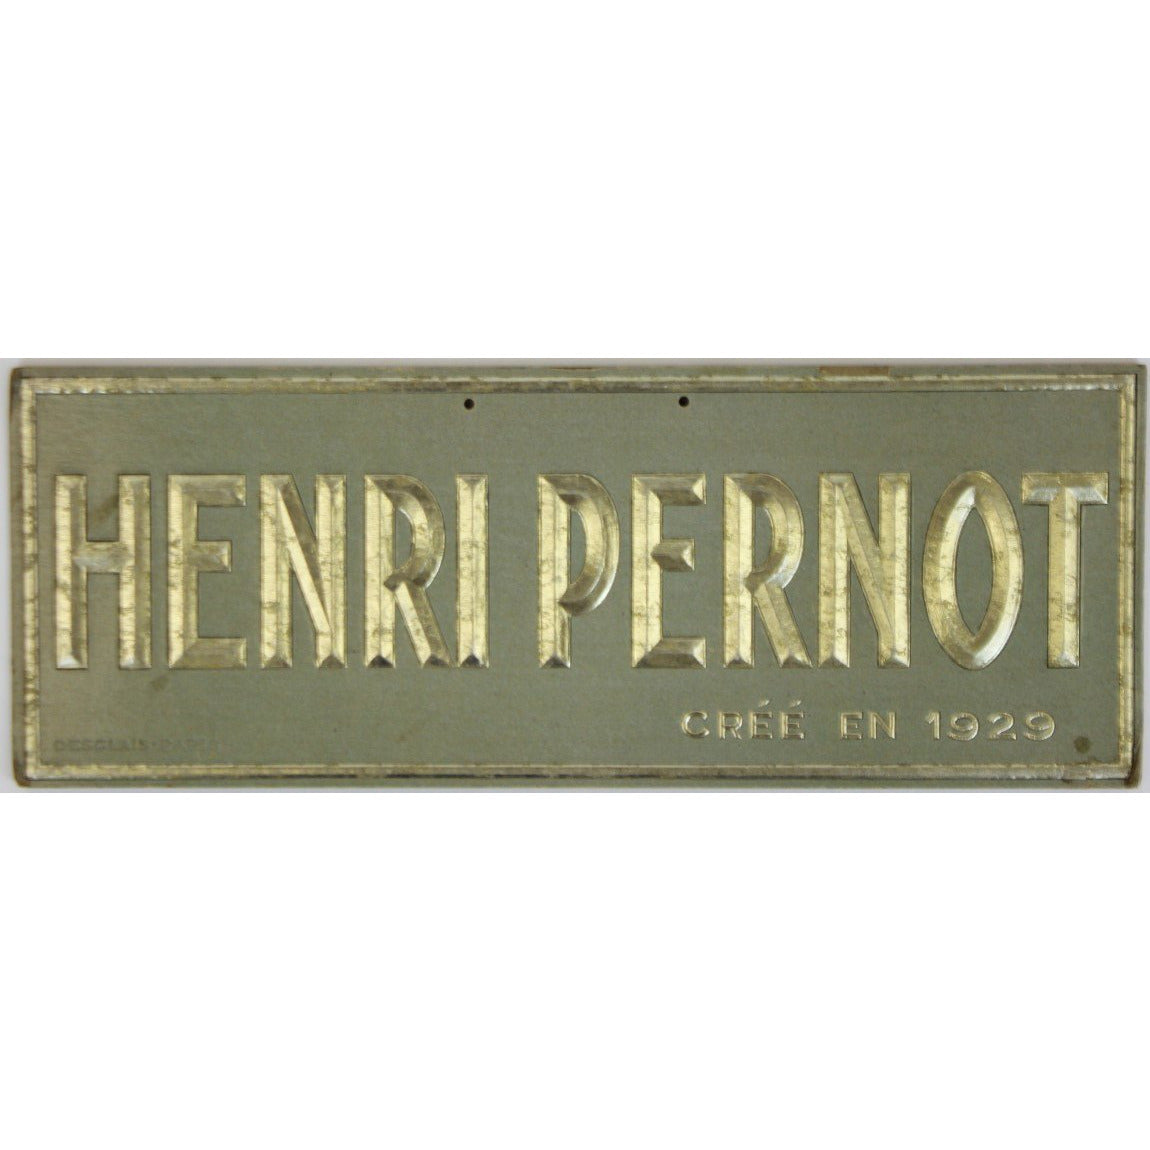 Henri Pernot Cree En 1929 Card